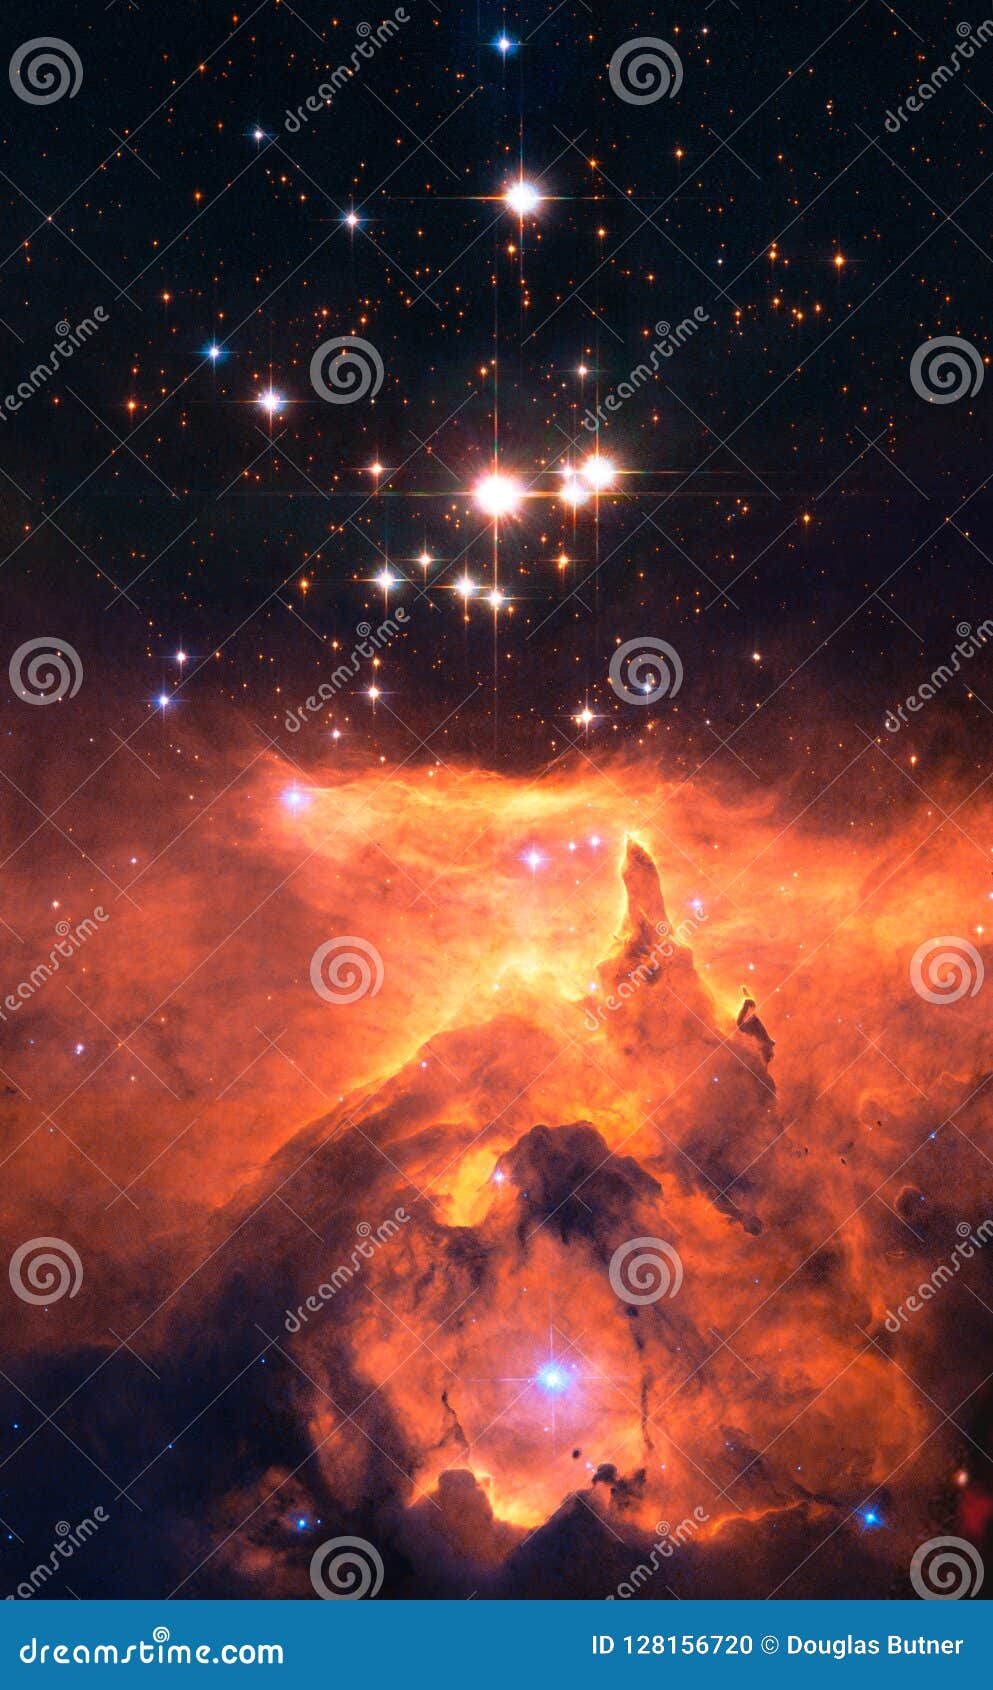 Red Fire Emission Nebula Enhanced Universe Image Elements From